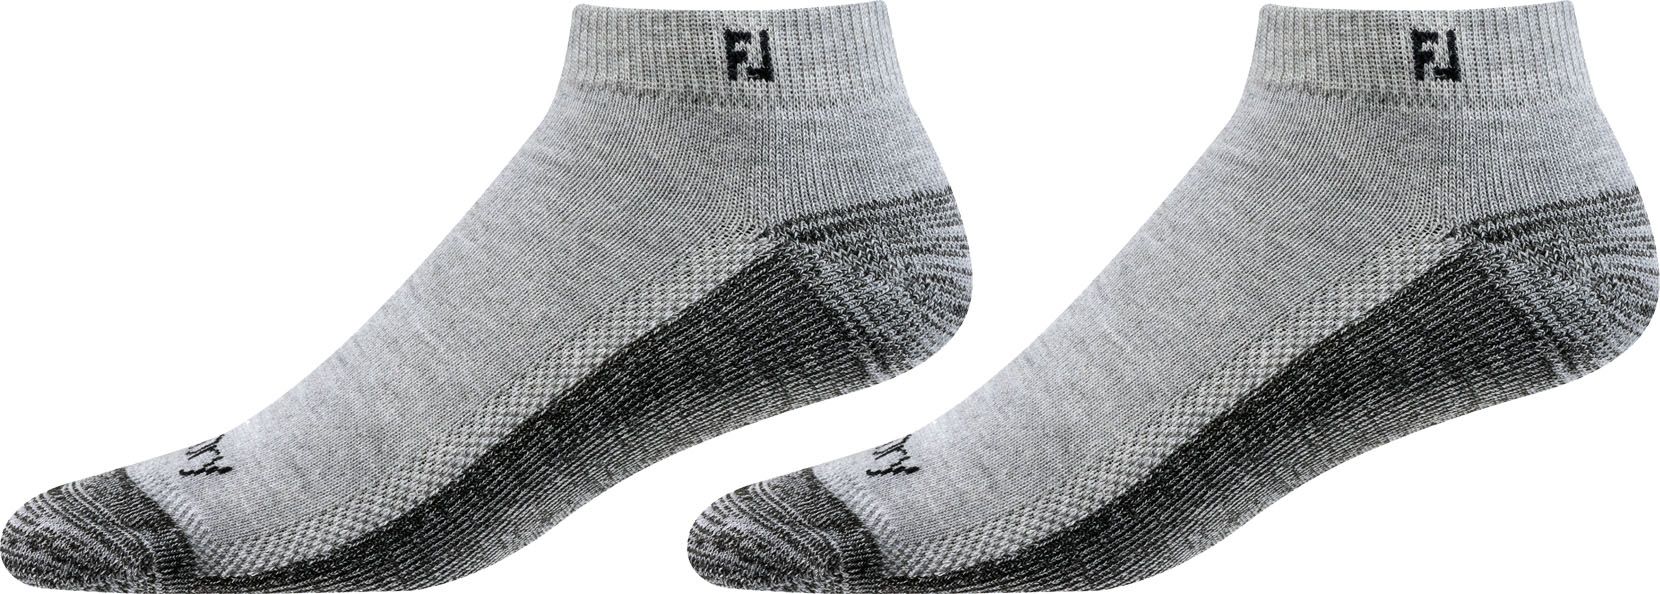 mens xl socks